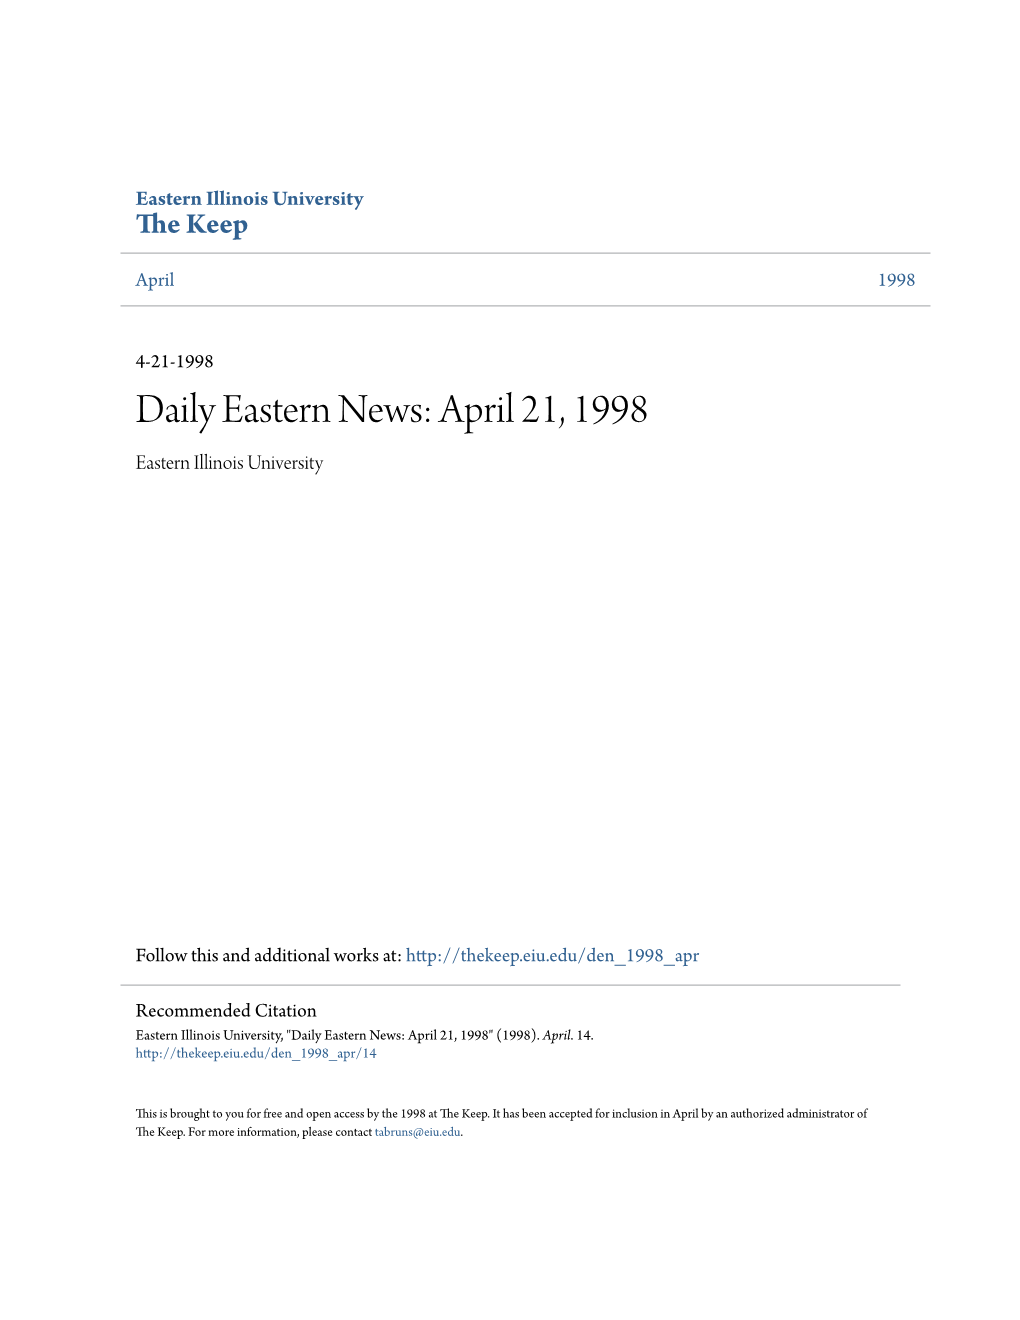 Daily Eastern News: April 21, 1998 Eastern Illinois University